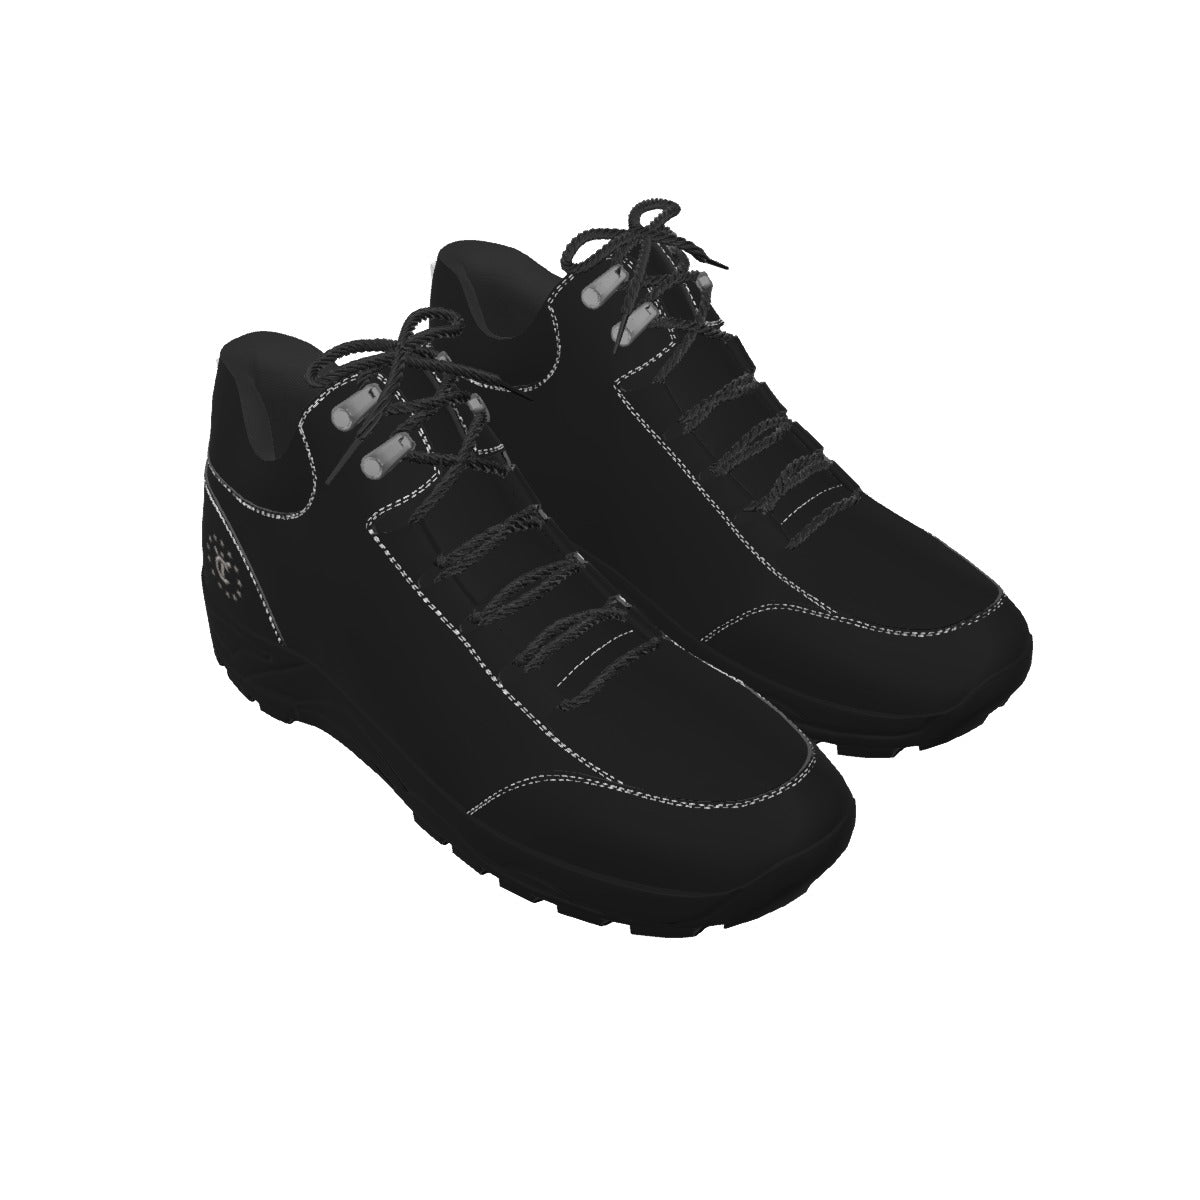 YIC Men's Hiking Boots - Vantablack